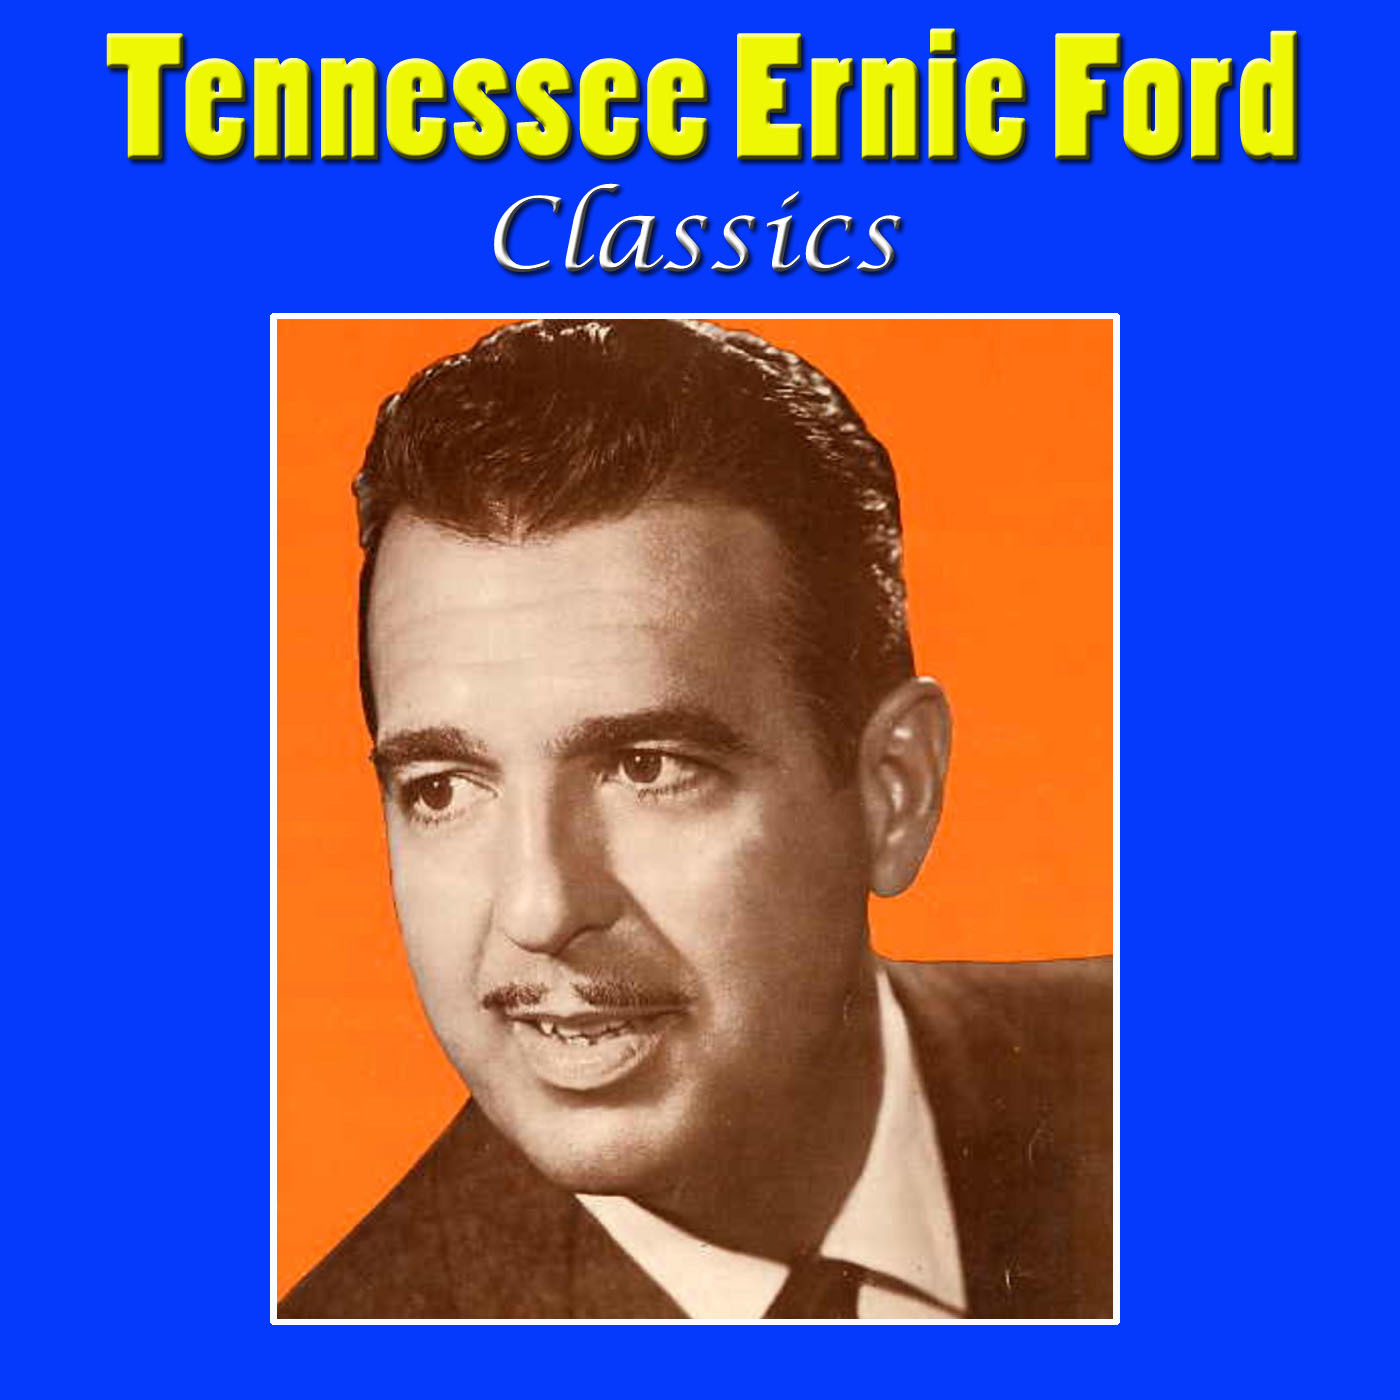 Tennessee Ernie Ford Classics